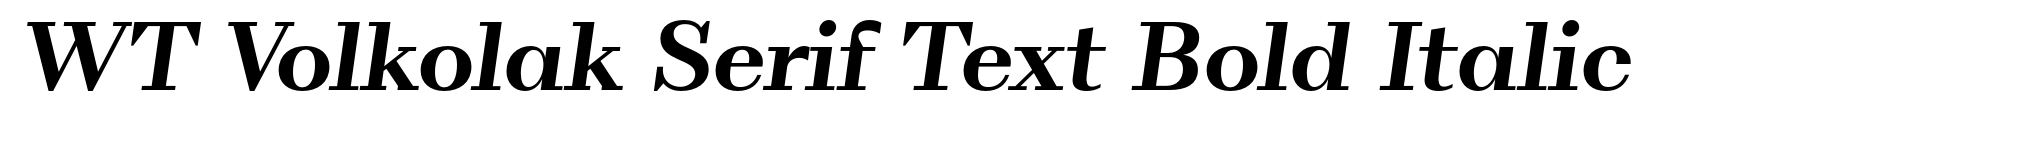 WT Volkolak Serif Text Bold Italic image